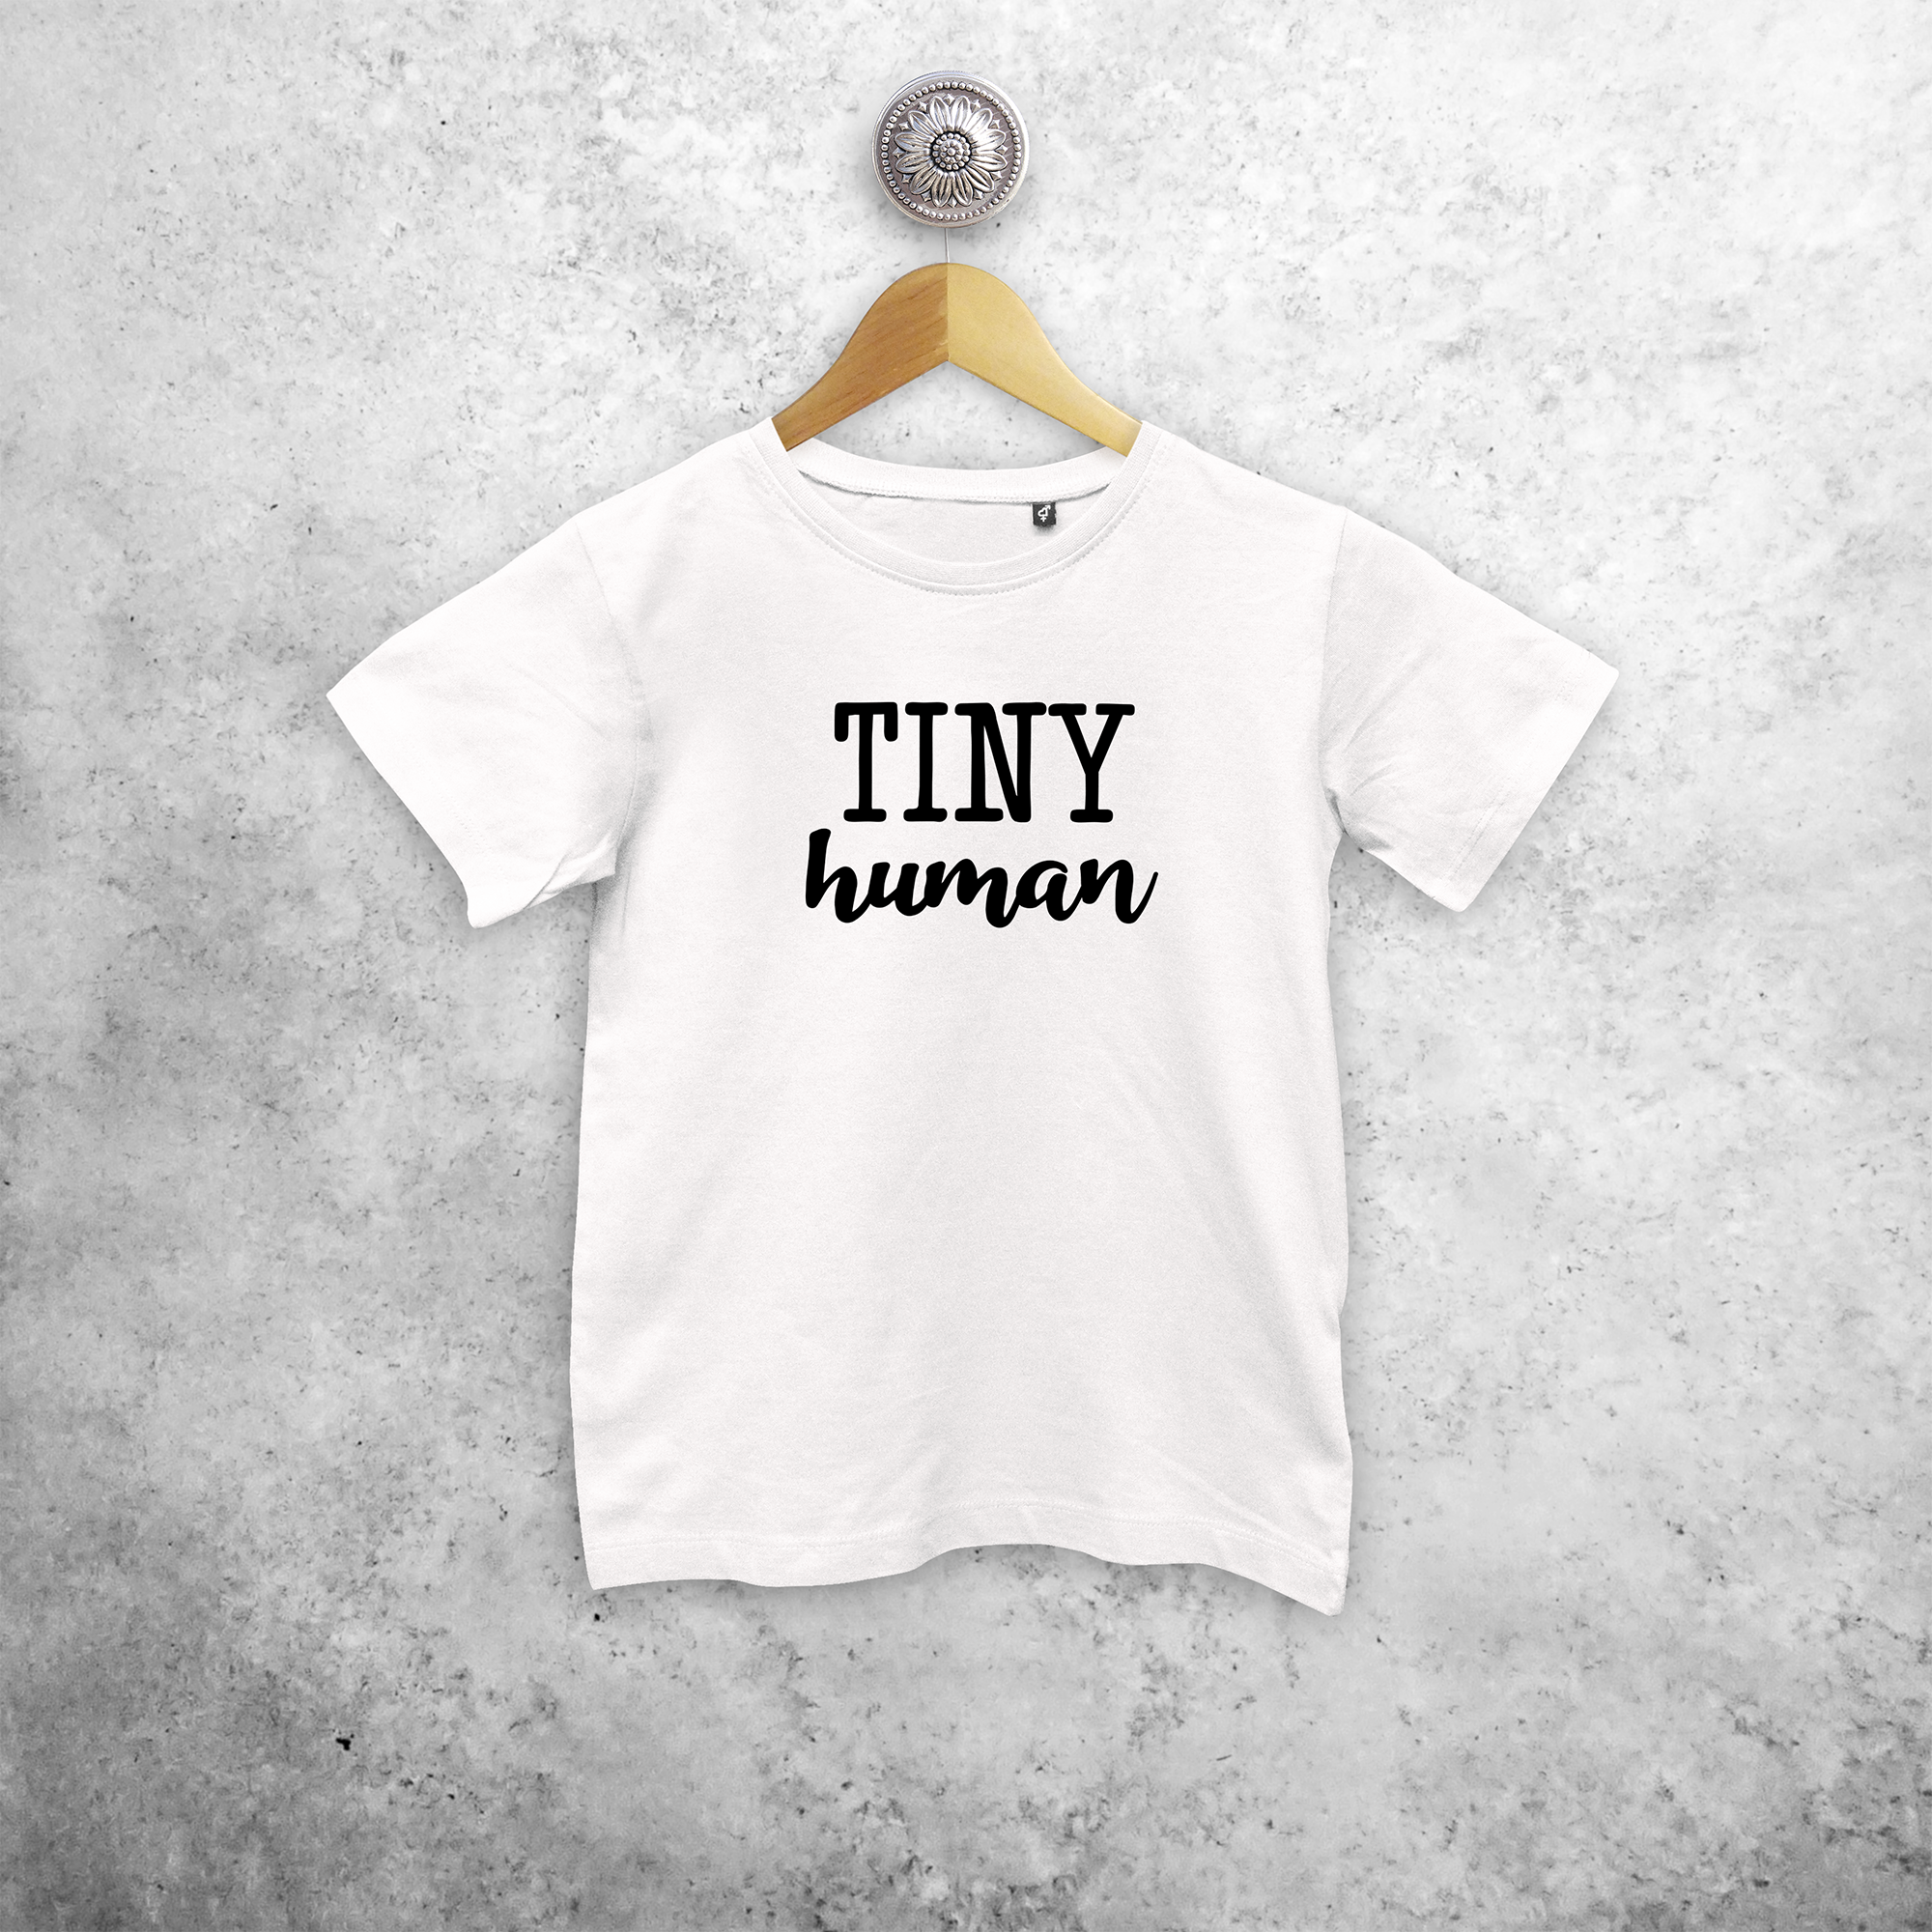 'Tiny human' kids shortsleeve shirt